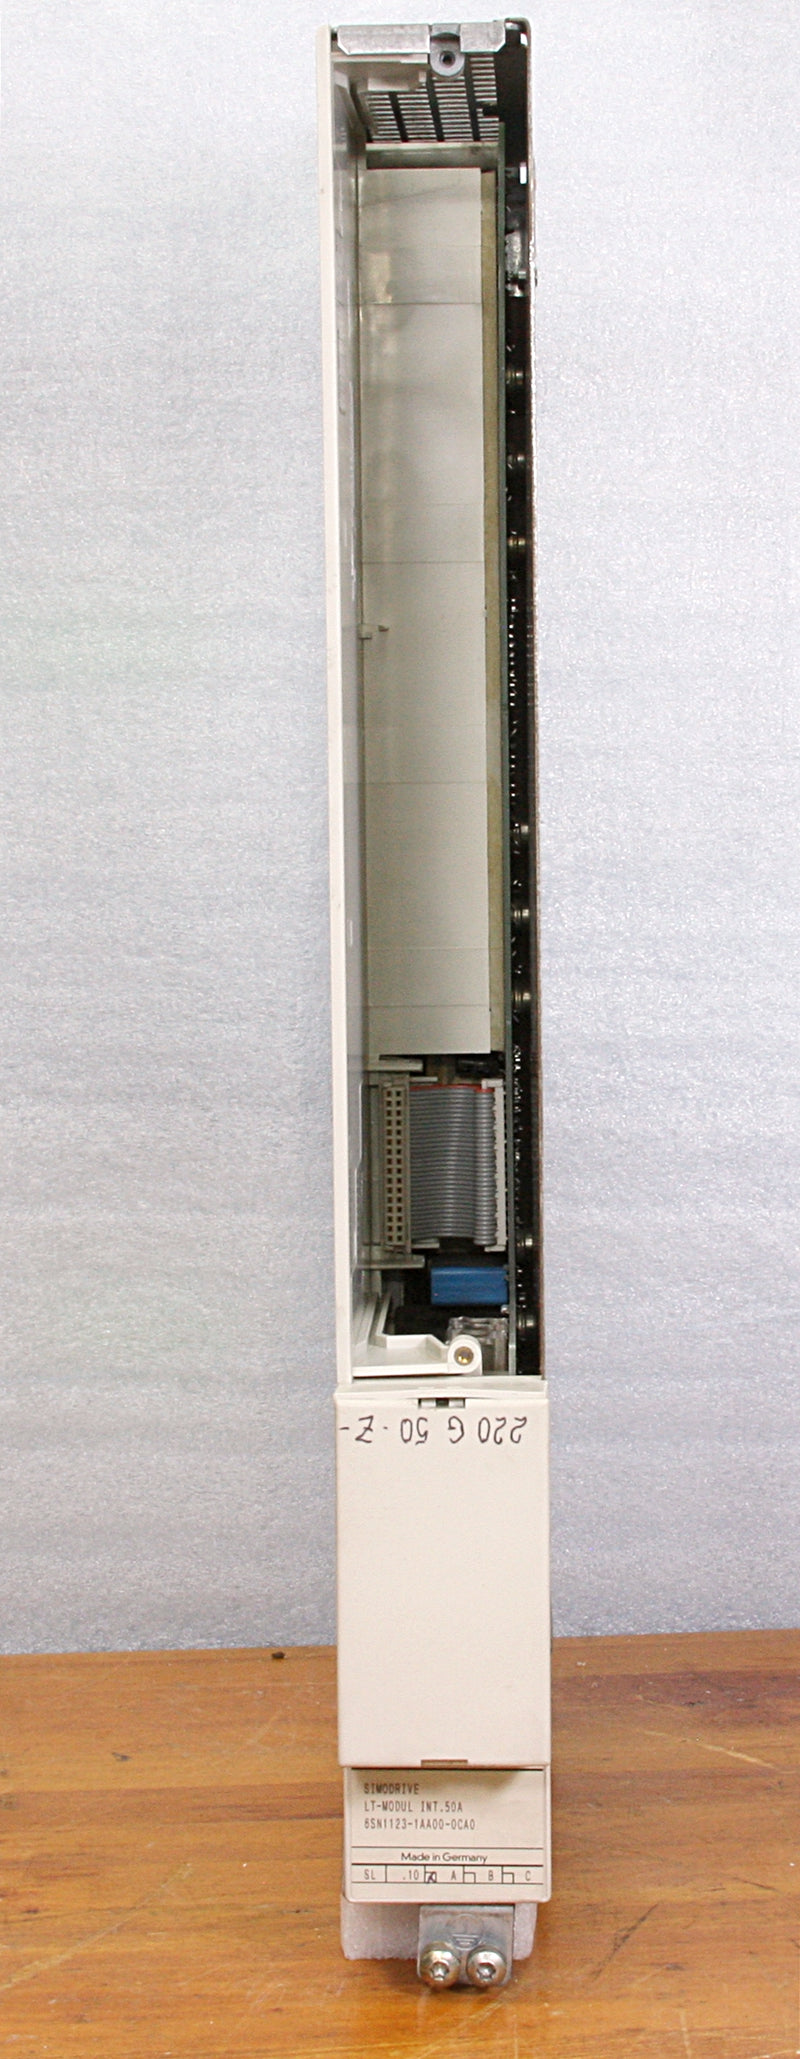 Siemens 6SN1123-1AA00-0CA0 Simodrive